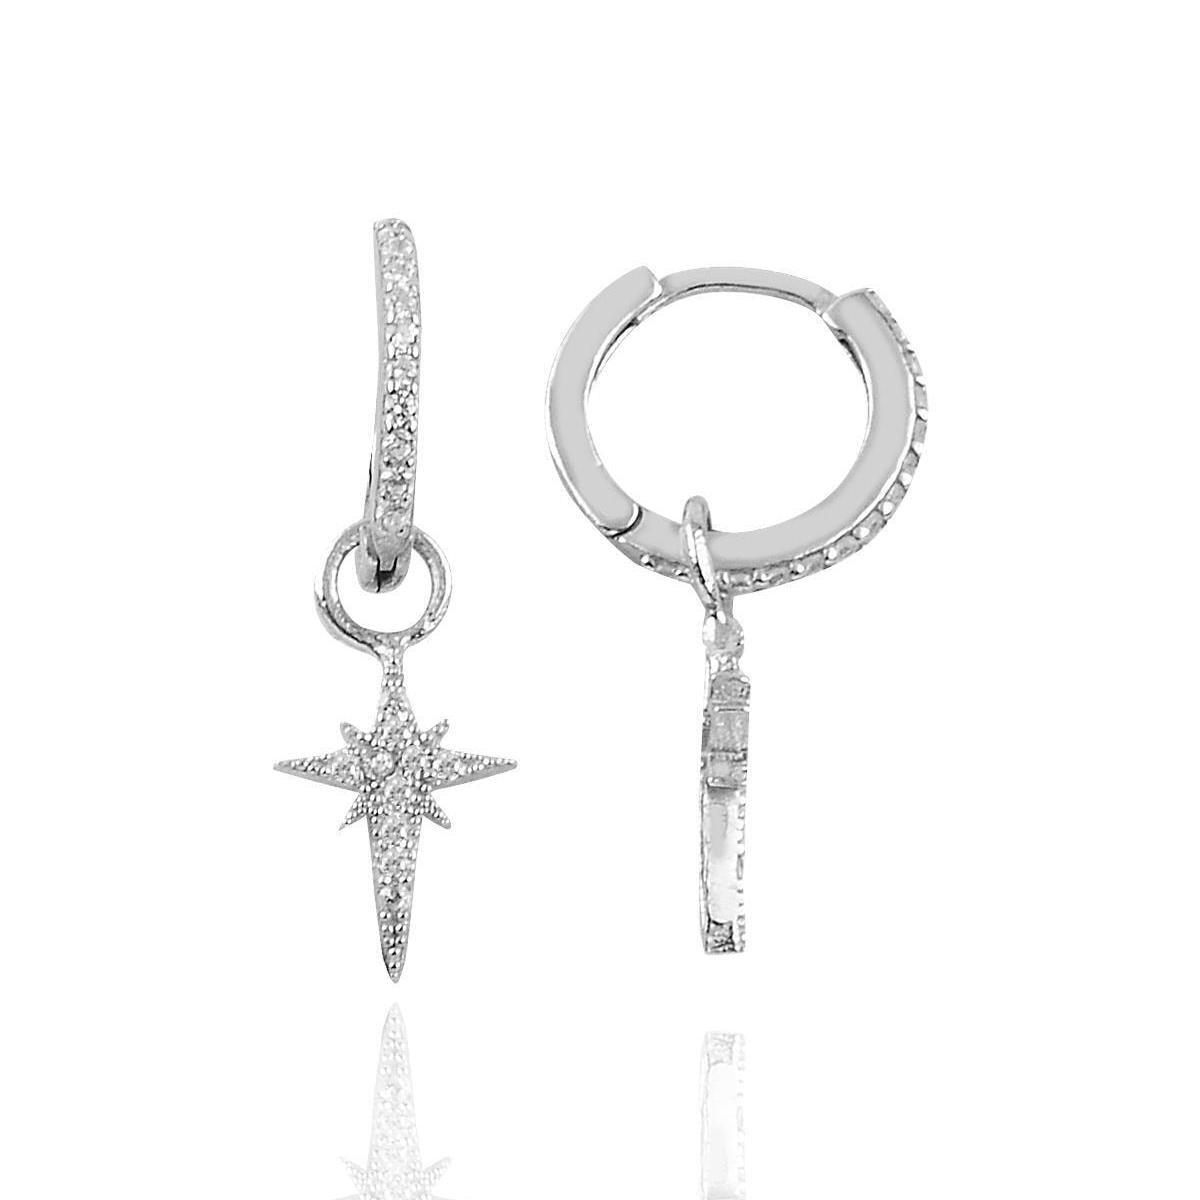 North Star Hoop Earrings • North Star Earrings Diamond • Gift For Mom - Trending Silver Gifts